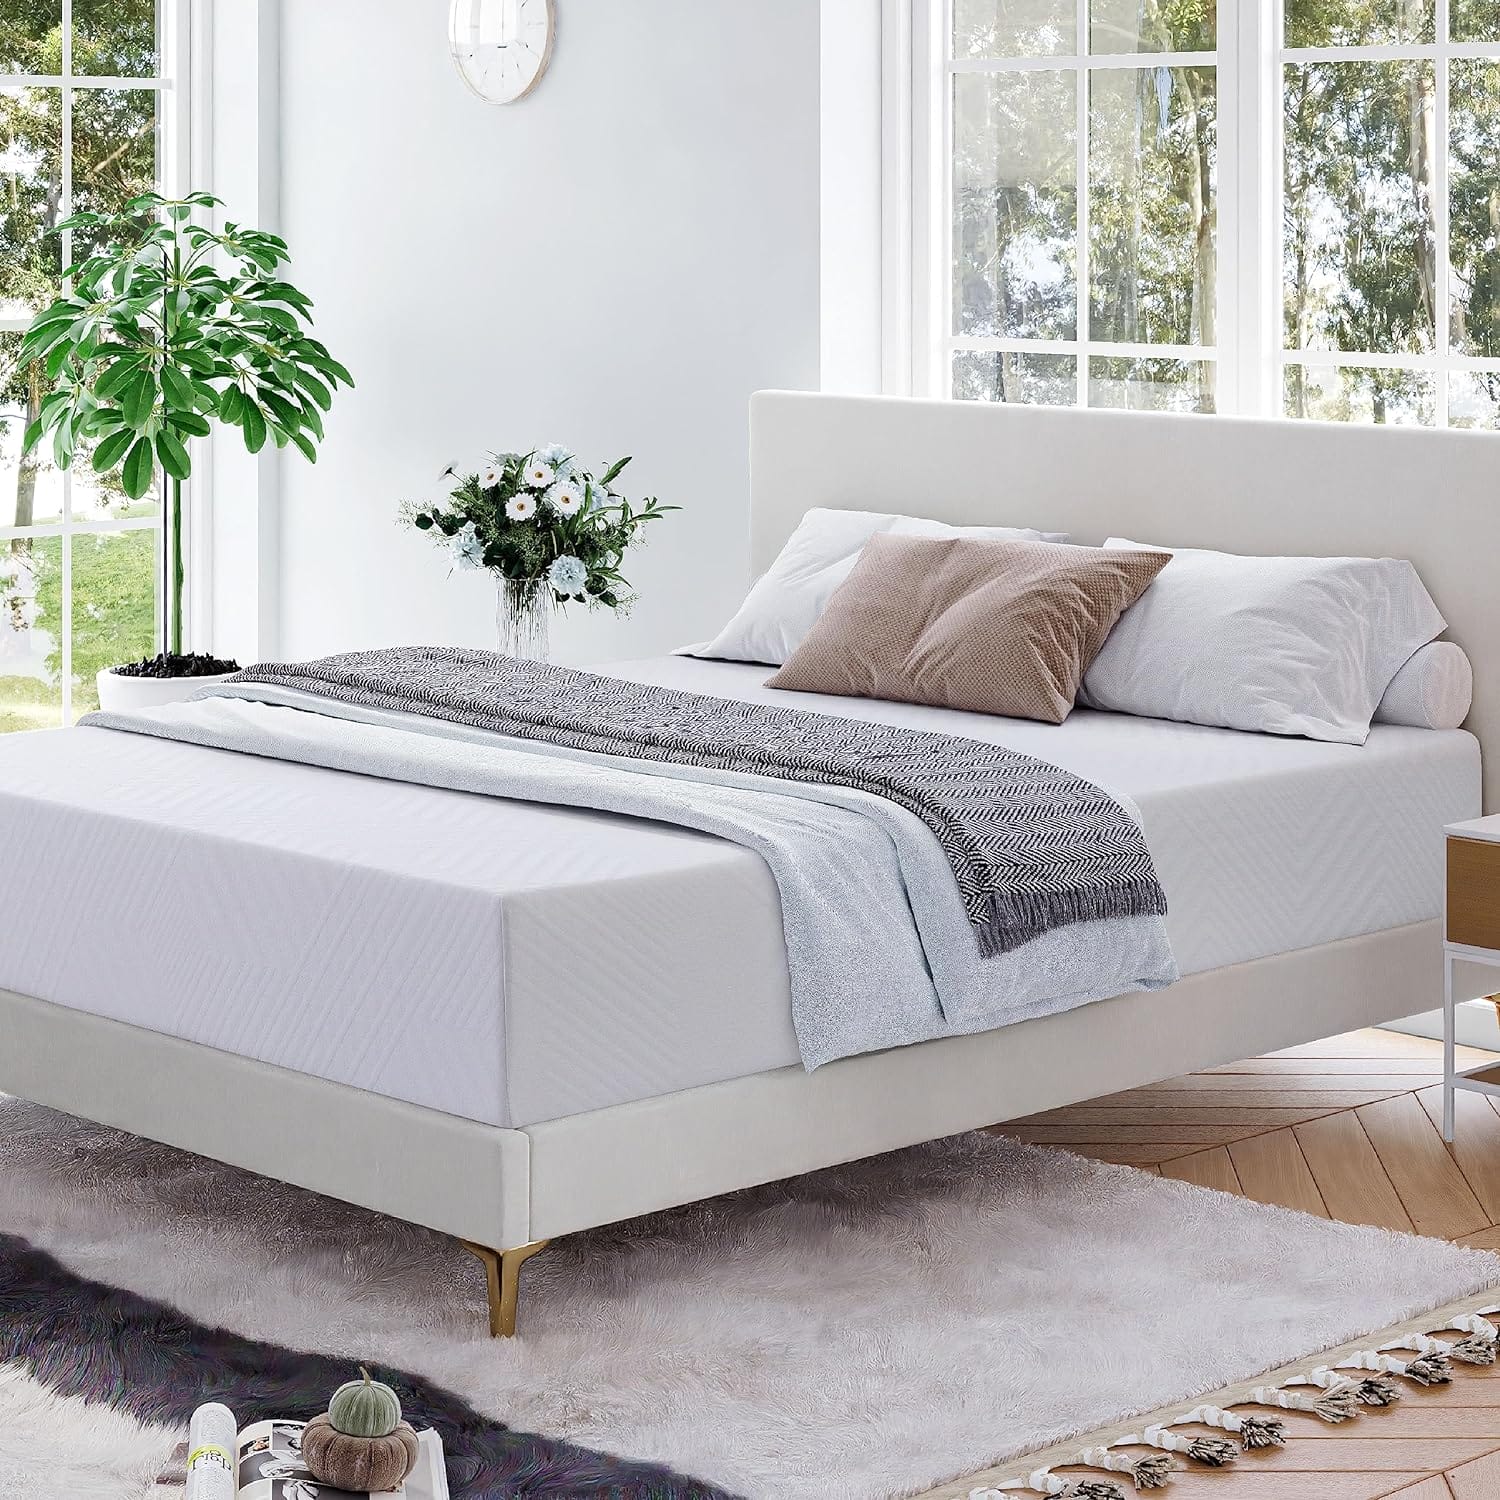 dyonery queen mattress review - Dyonery Mattress Review: Comfort, Quality, Safety